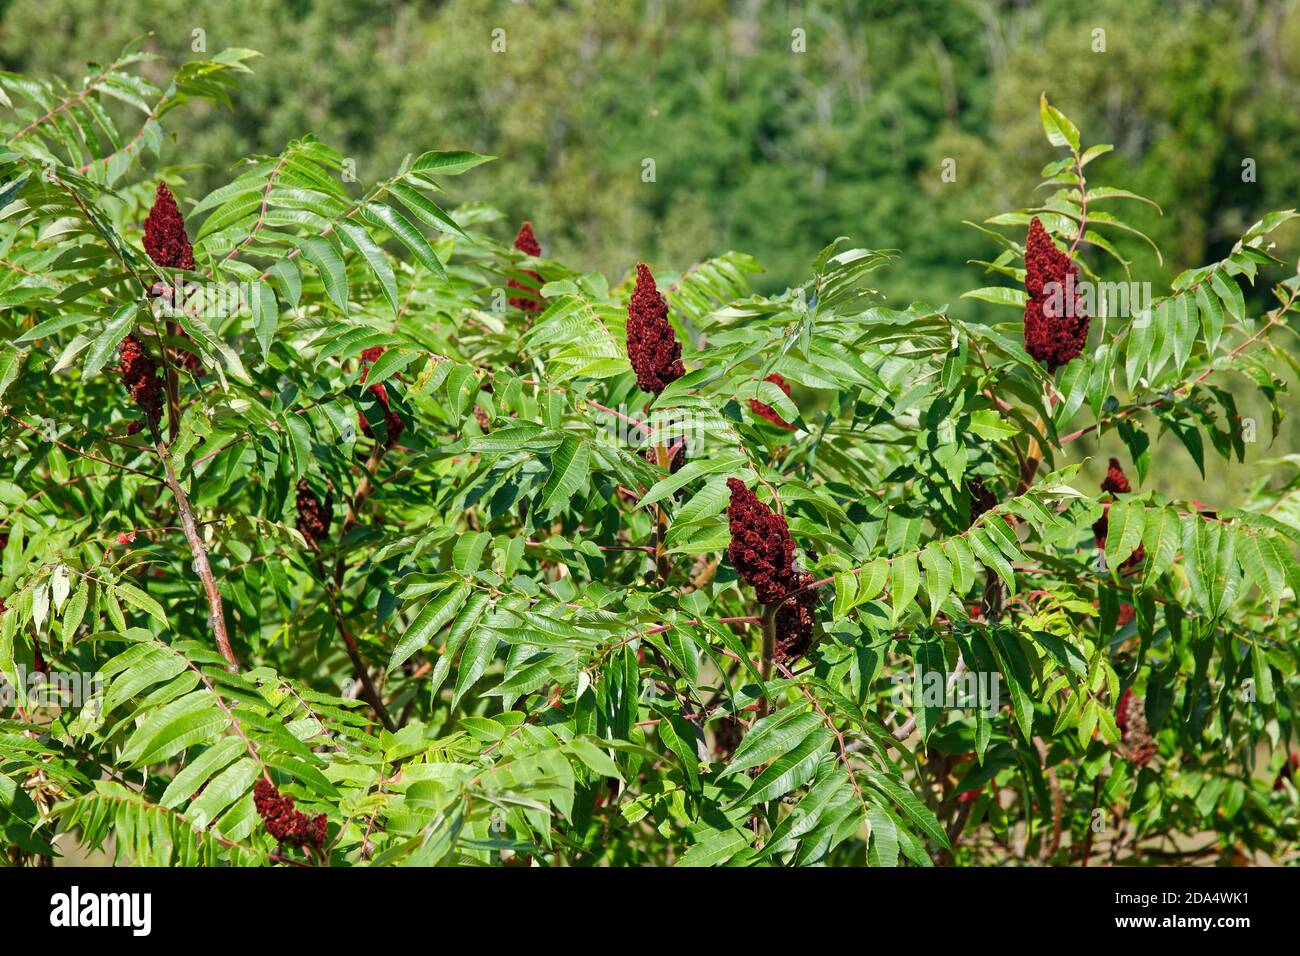 Staghorn sumac, rhus typina, wild flowering plant, small tree,, vegetation, dark red flower stalks, narrow green leaves, rich in tannin, native to eas Stock Photo